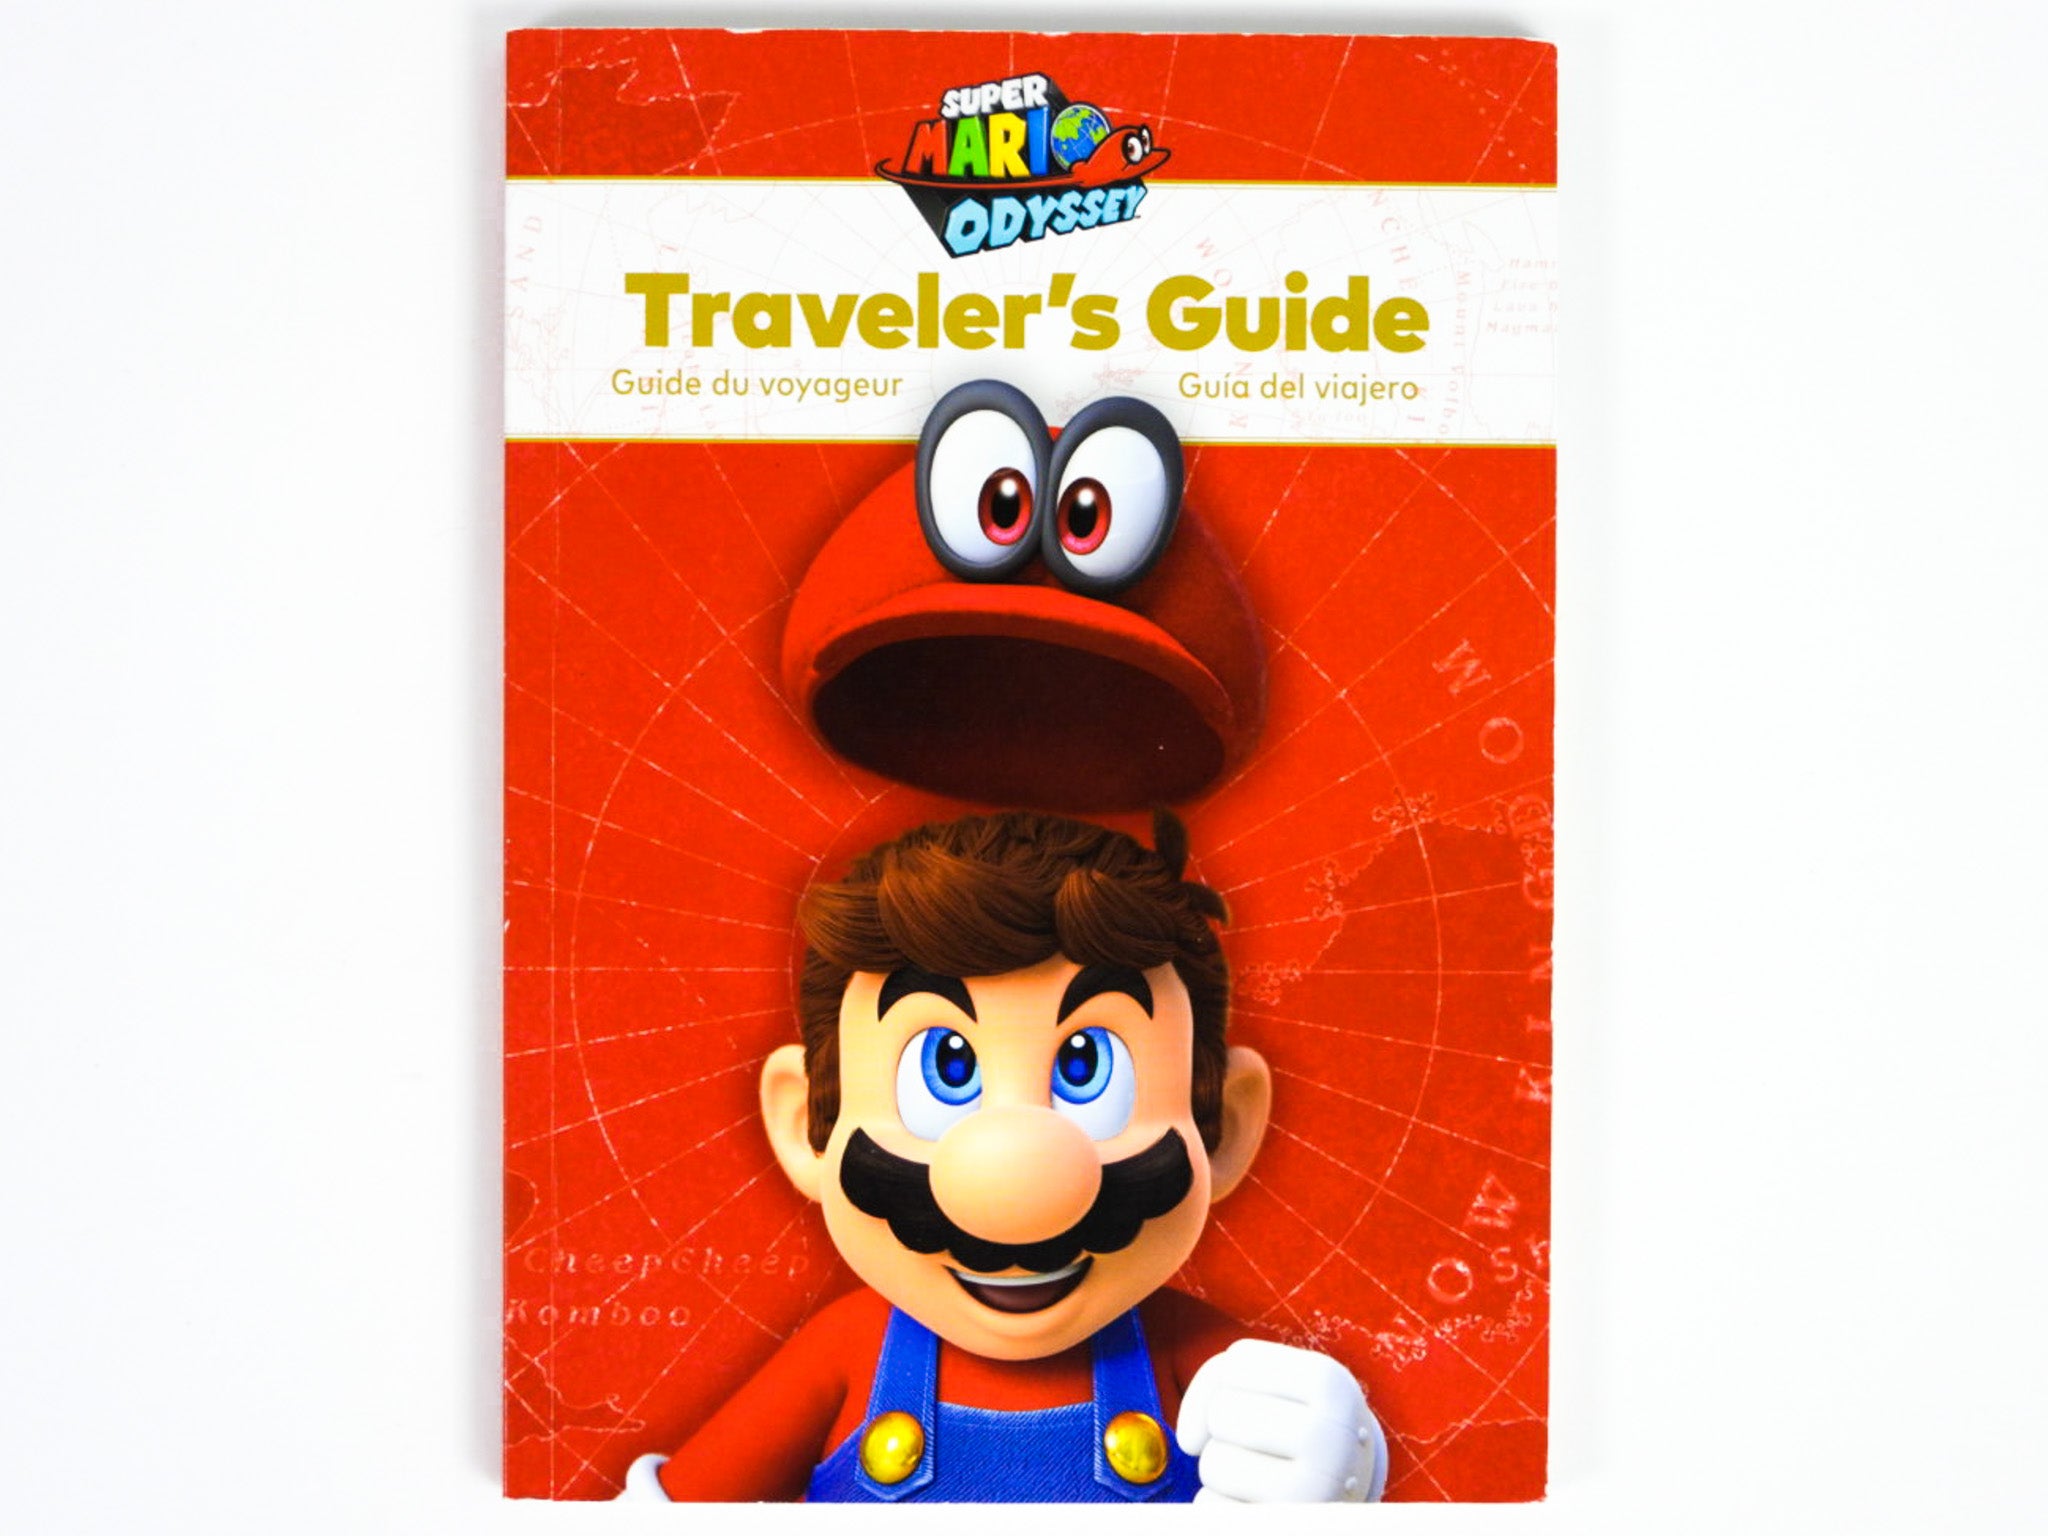 Super Mario Odyssey Starter Pack Launches September 28 – NintendoSoup